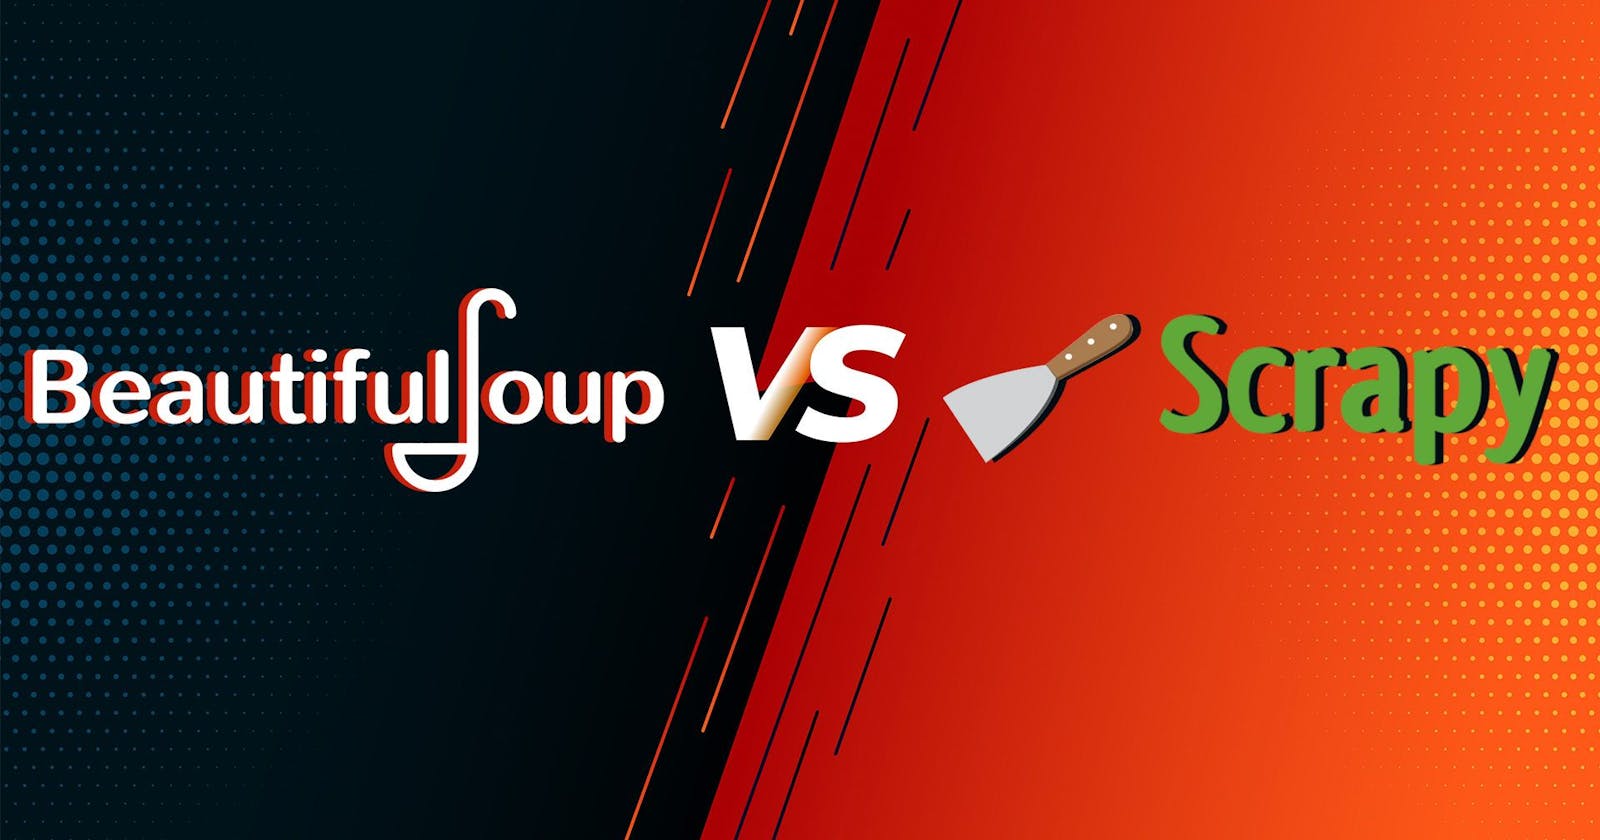 Beautiful Soup vs. Scrapy for web scraping